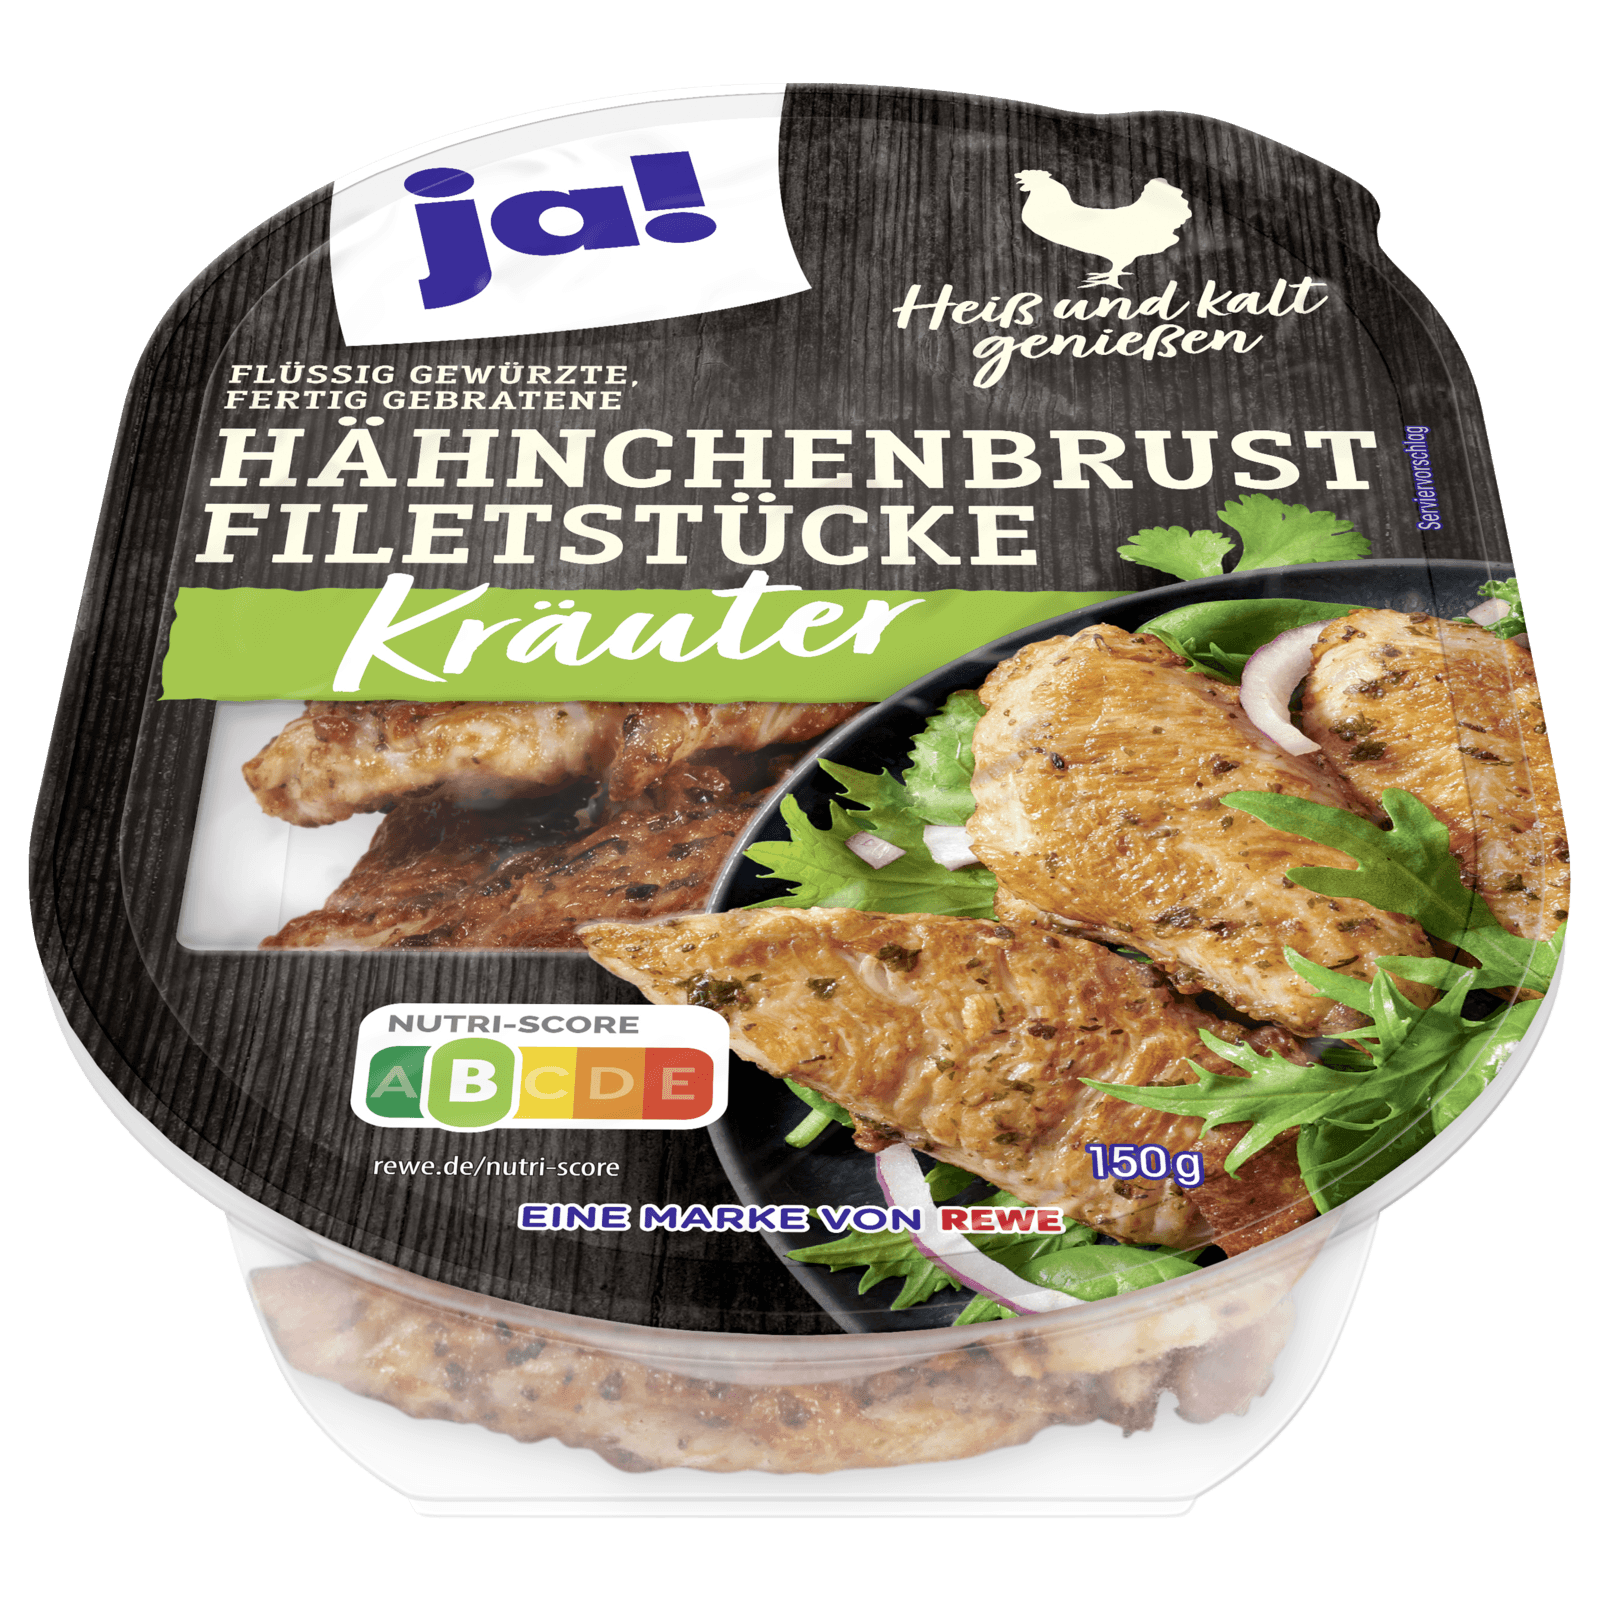 ja! Hähnchenbrust online bestellen! bei REWE 150g Kräuter Filetstücke